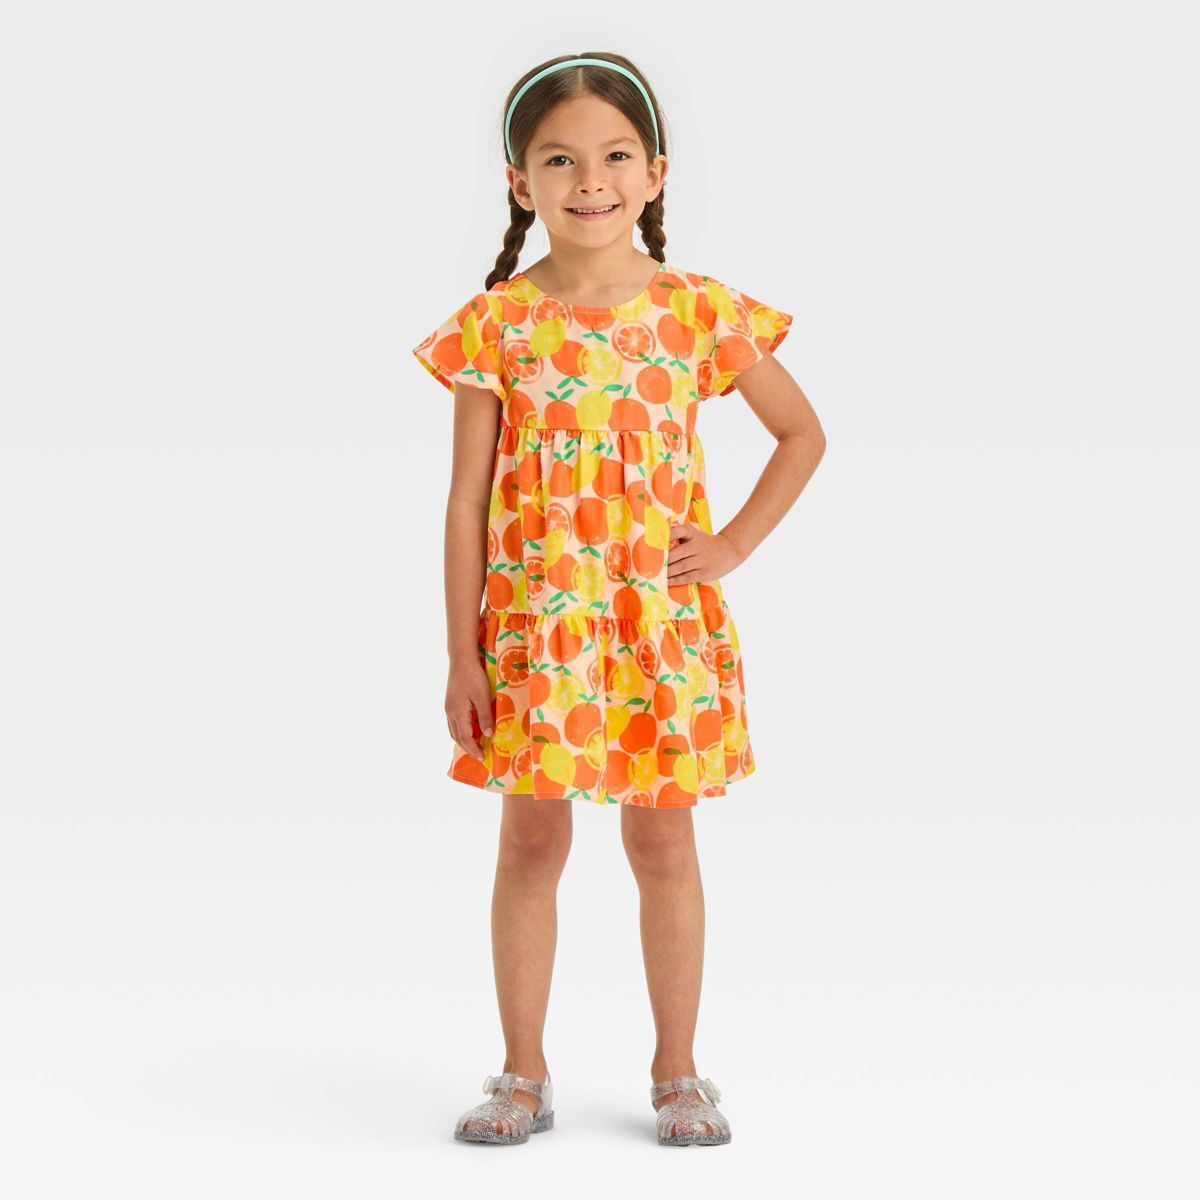 Toddler Girls' Citrus Dress - Cat & Jack™ Orange 5T | Target